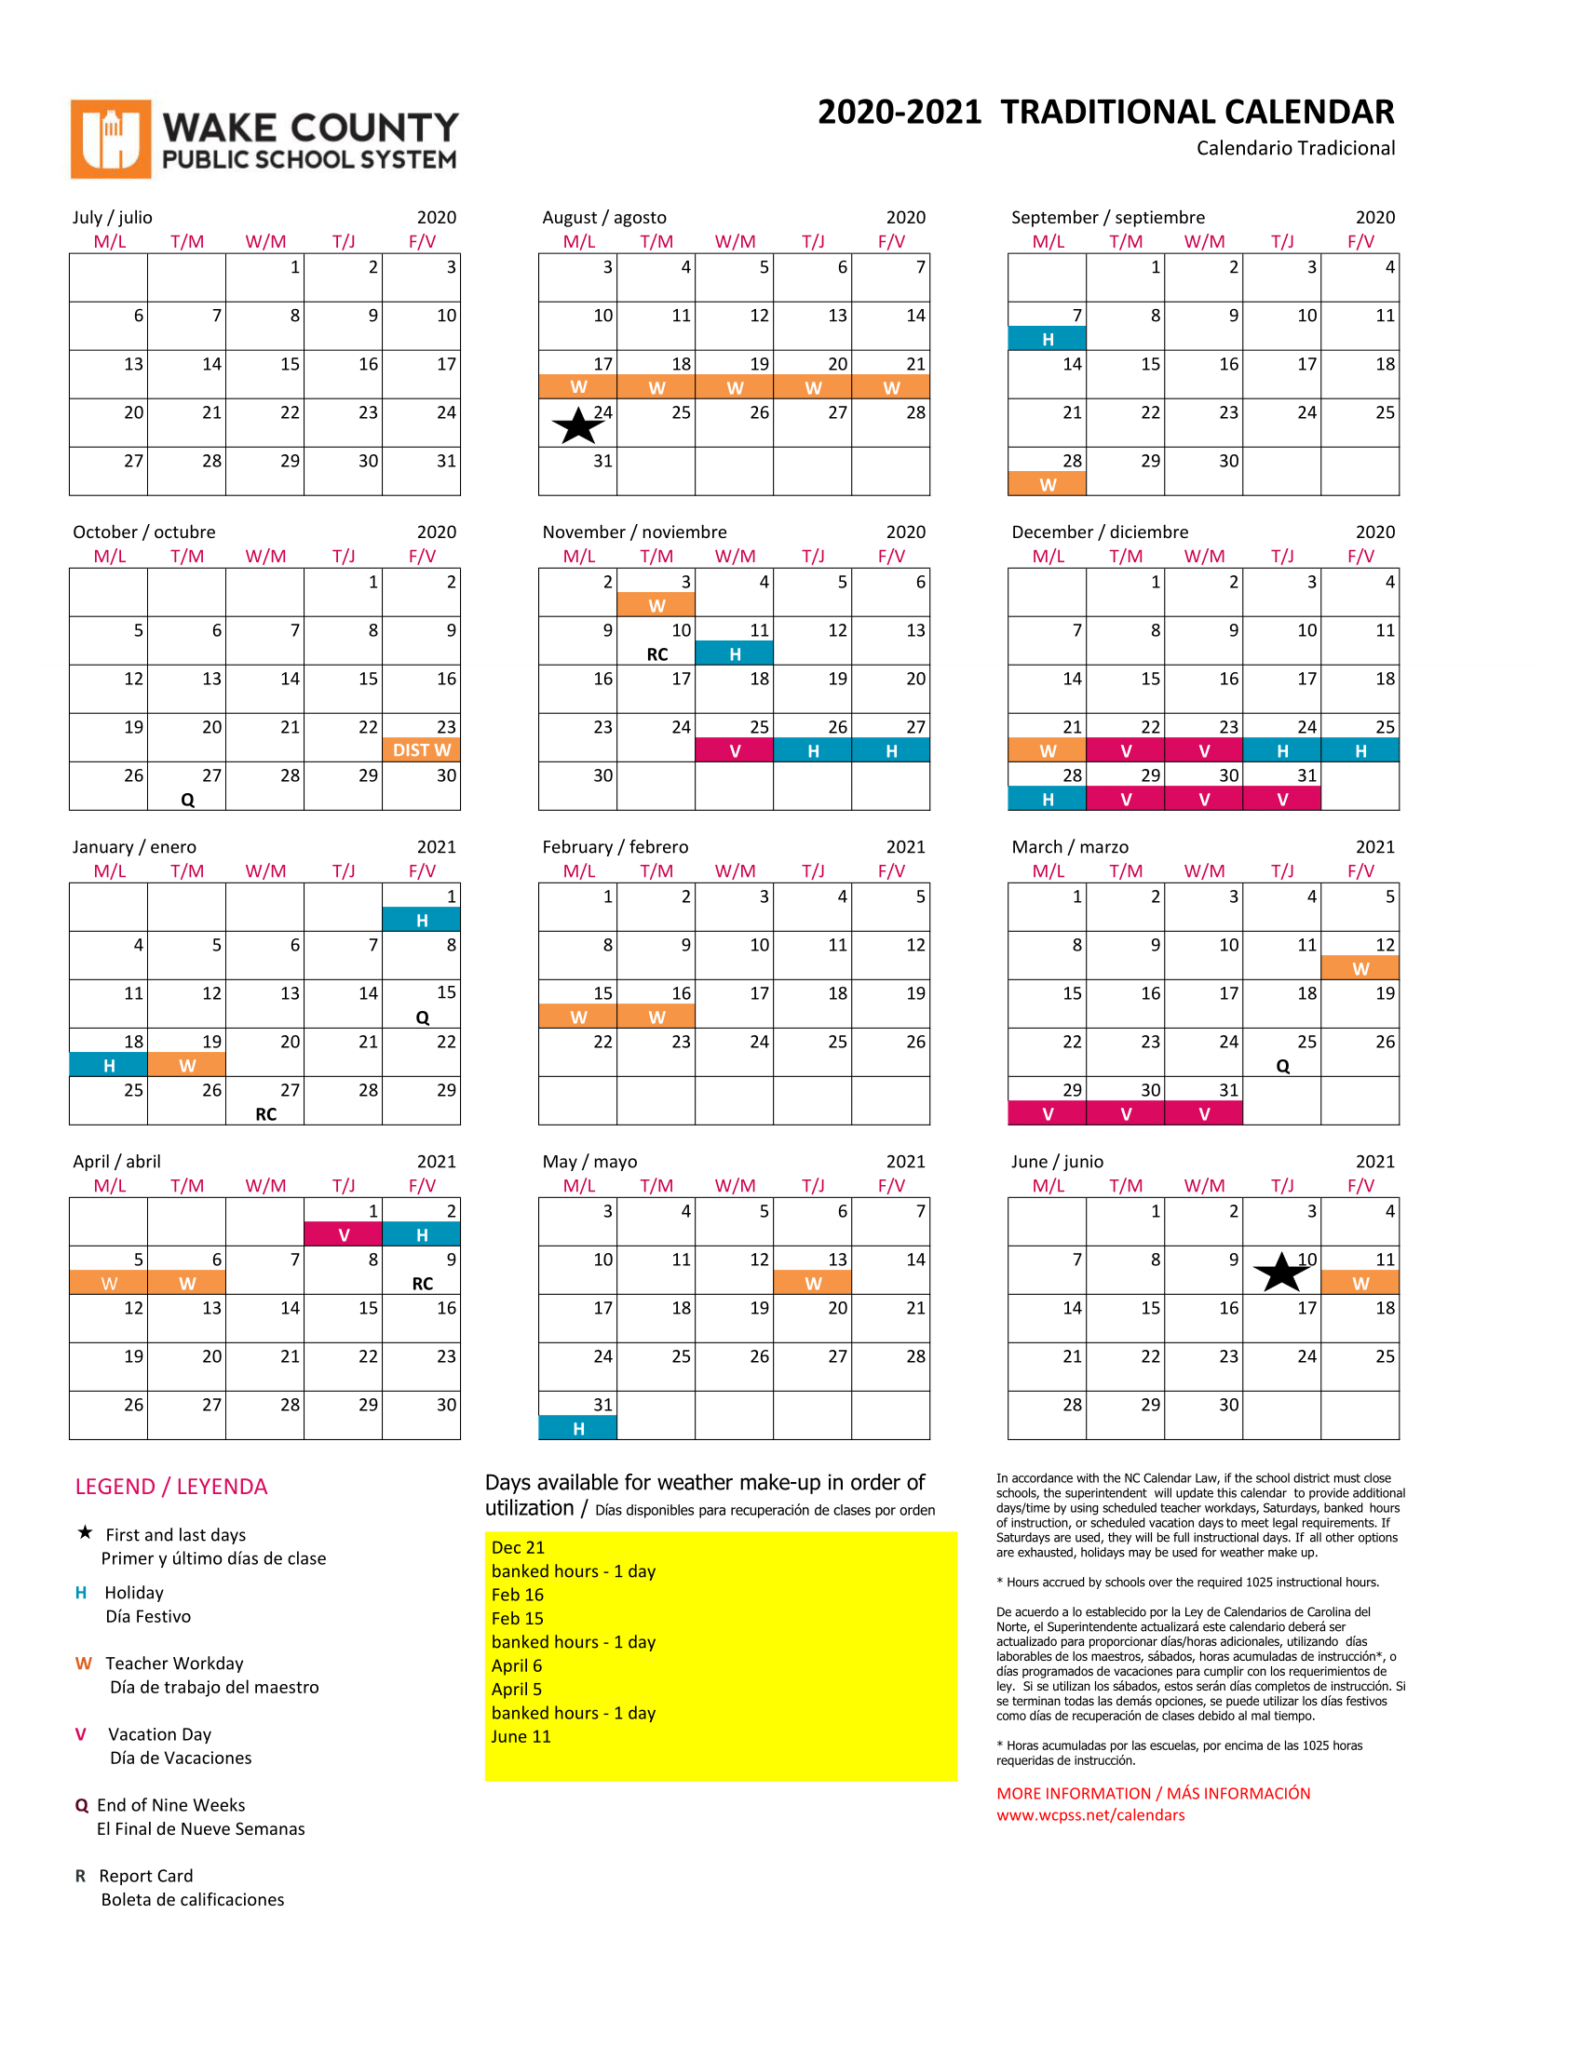 wake-county-public-school-calendar-county-school-calendar